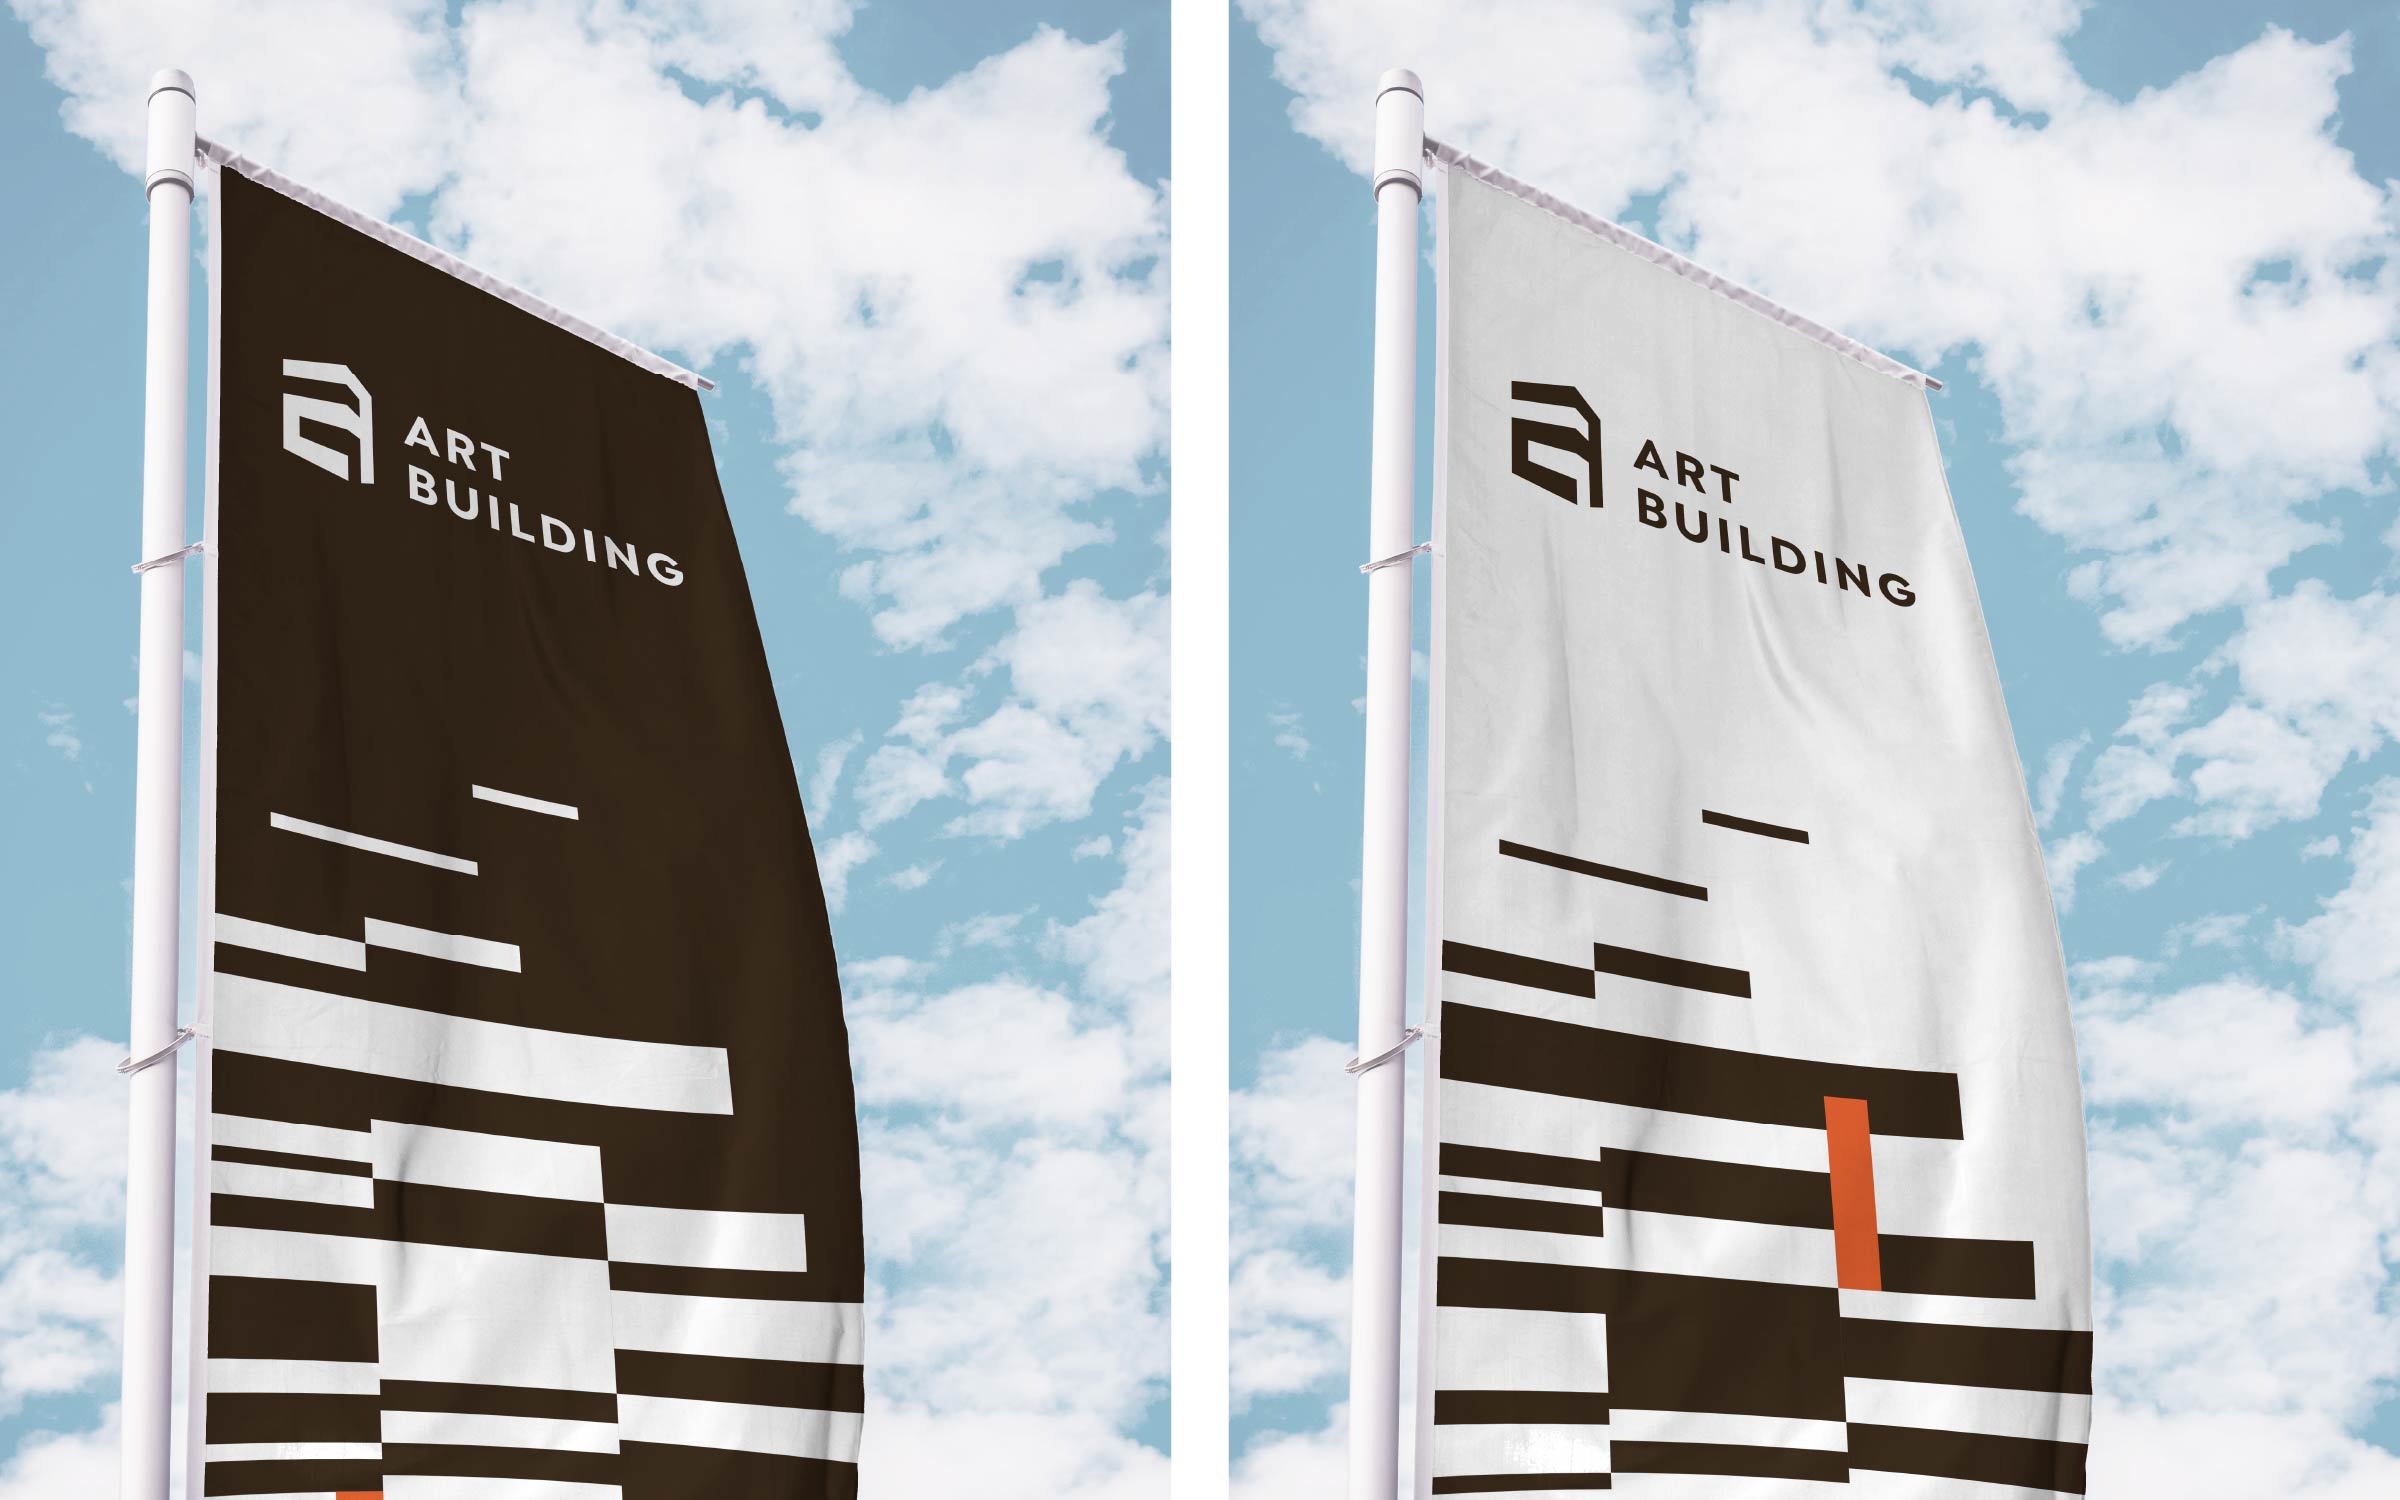 Art Building flaga reklamowa z logo